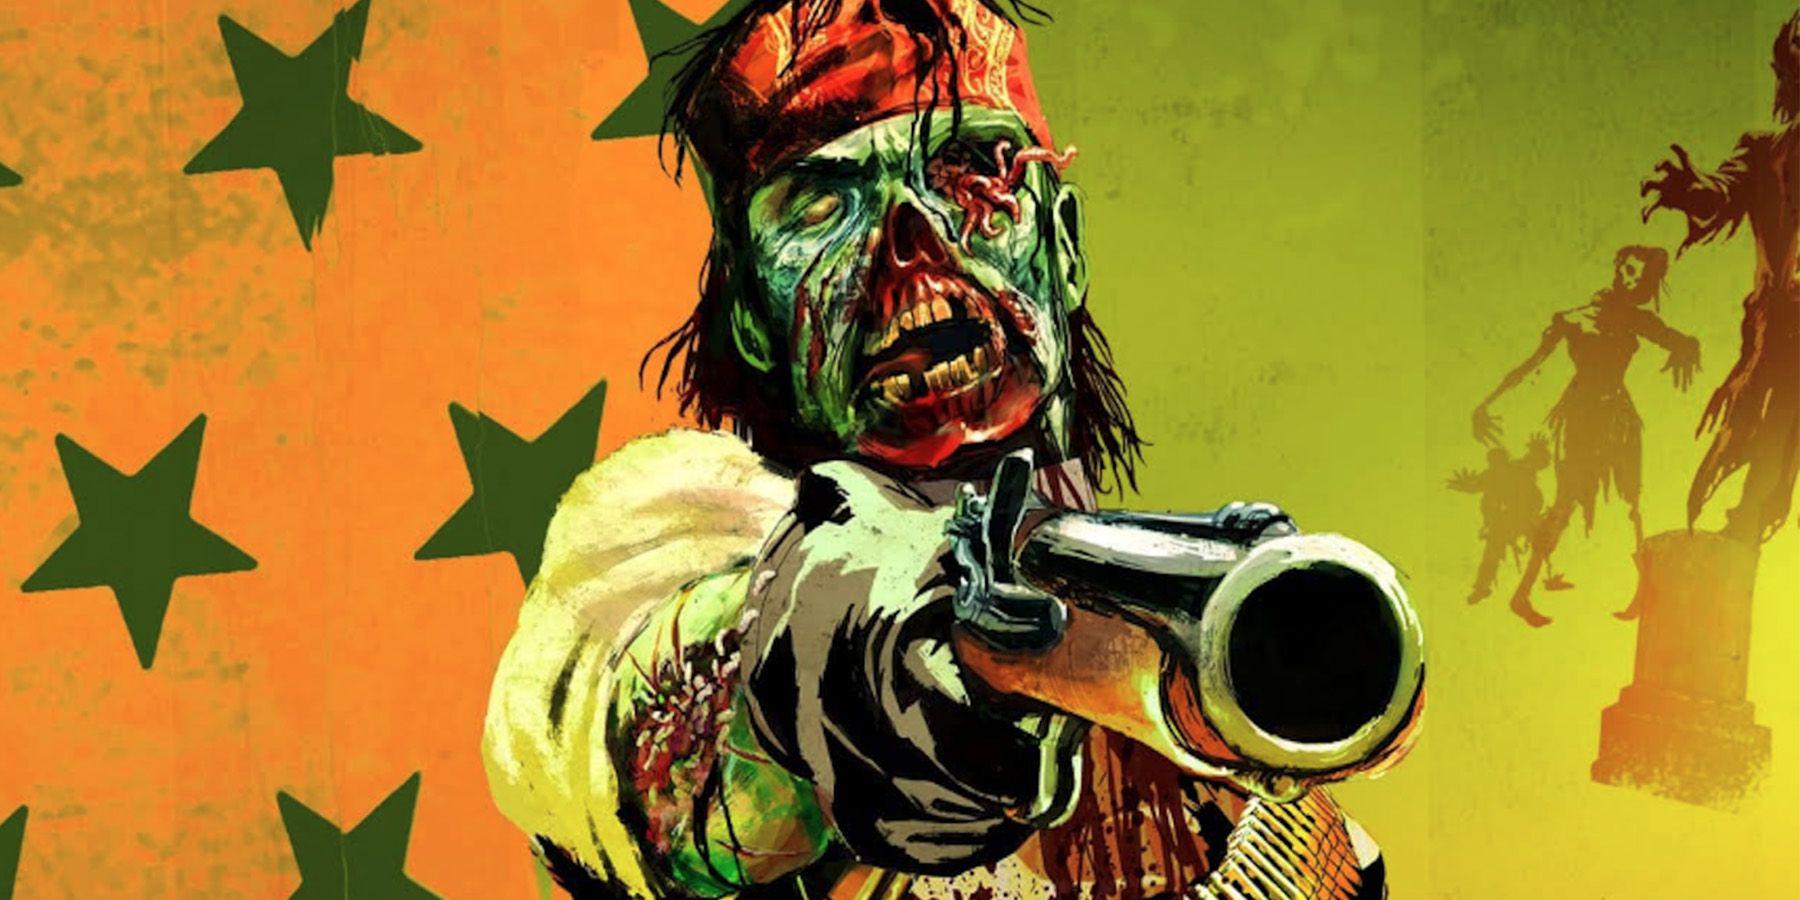 Red Dead Redemption 3 deve abraçar mais elementos do Weird West